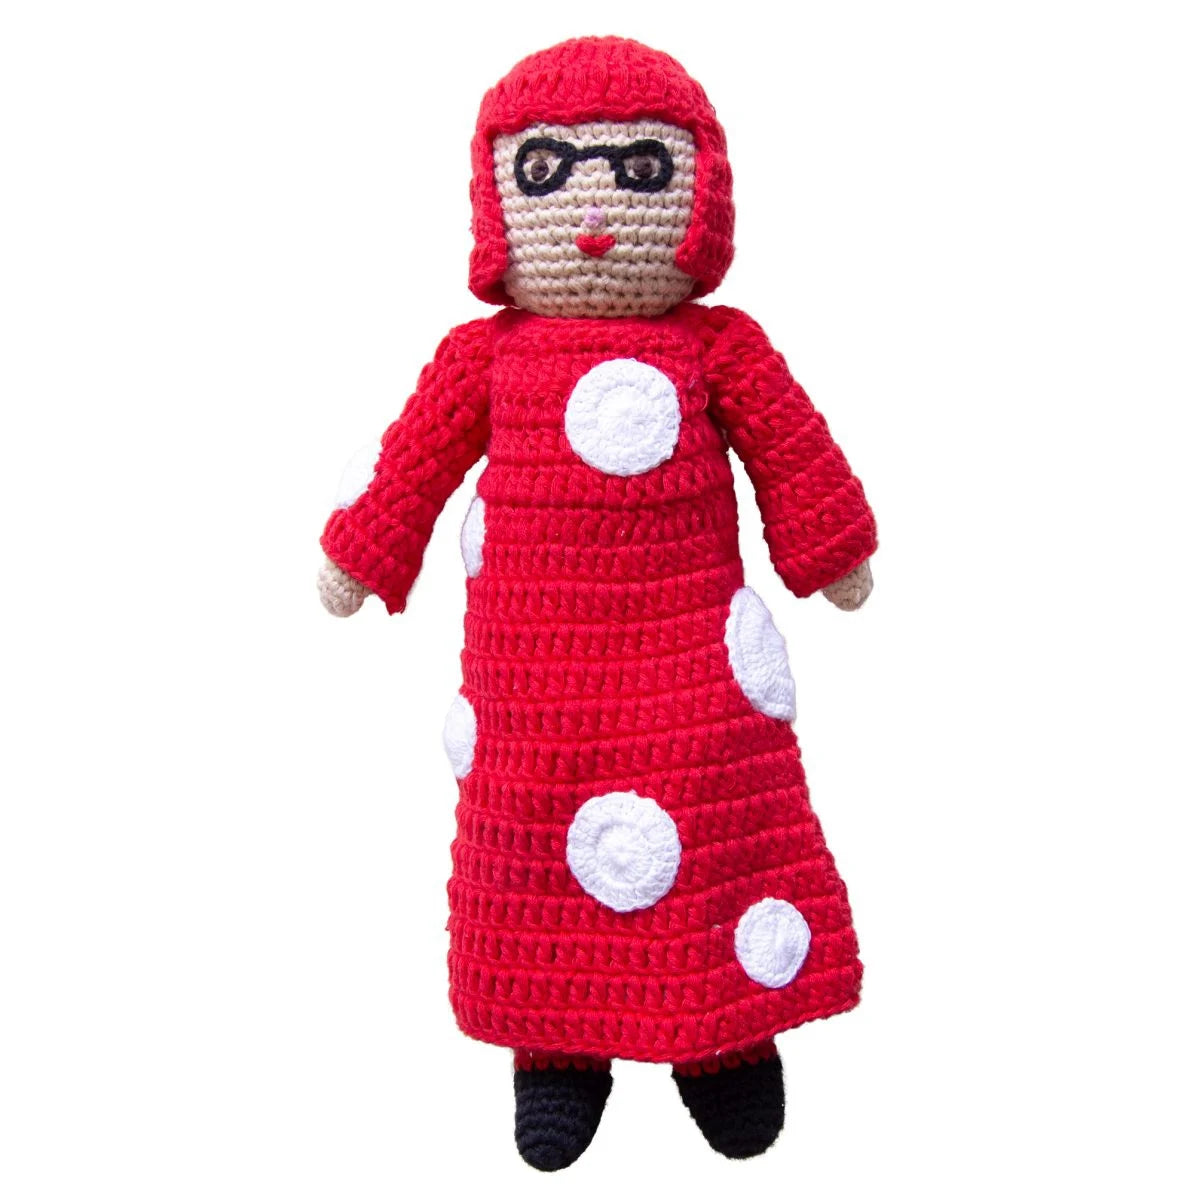 Kusama Yayoi crochet doll